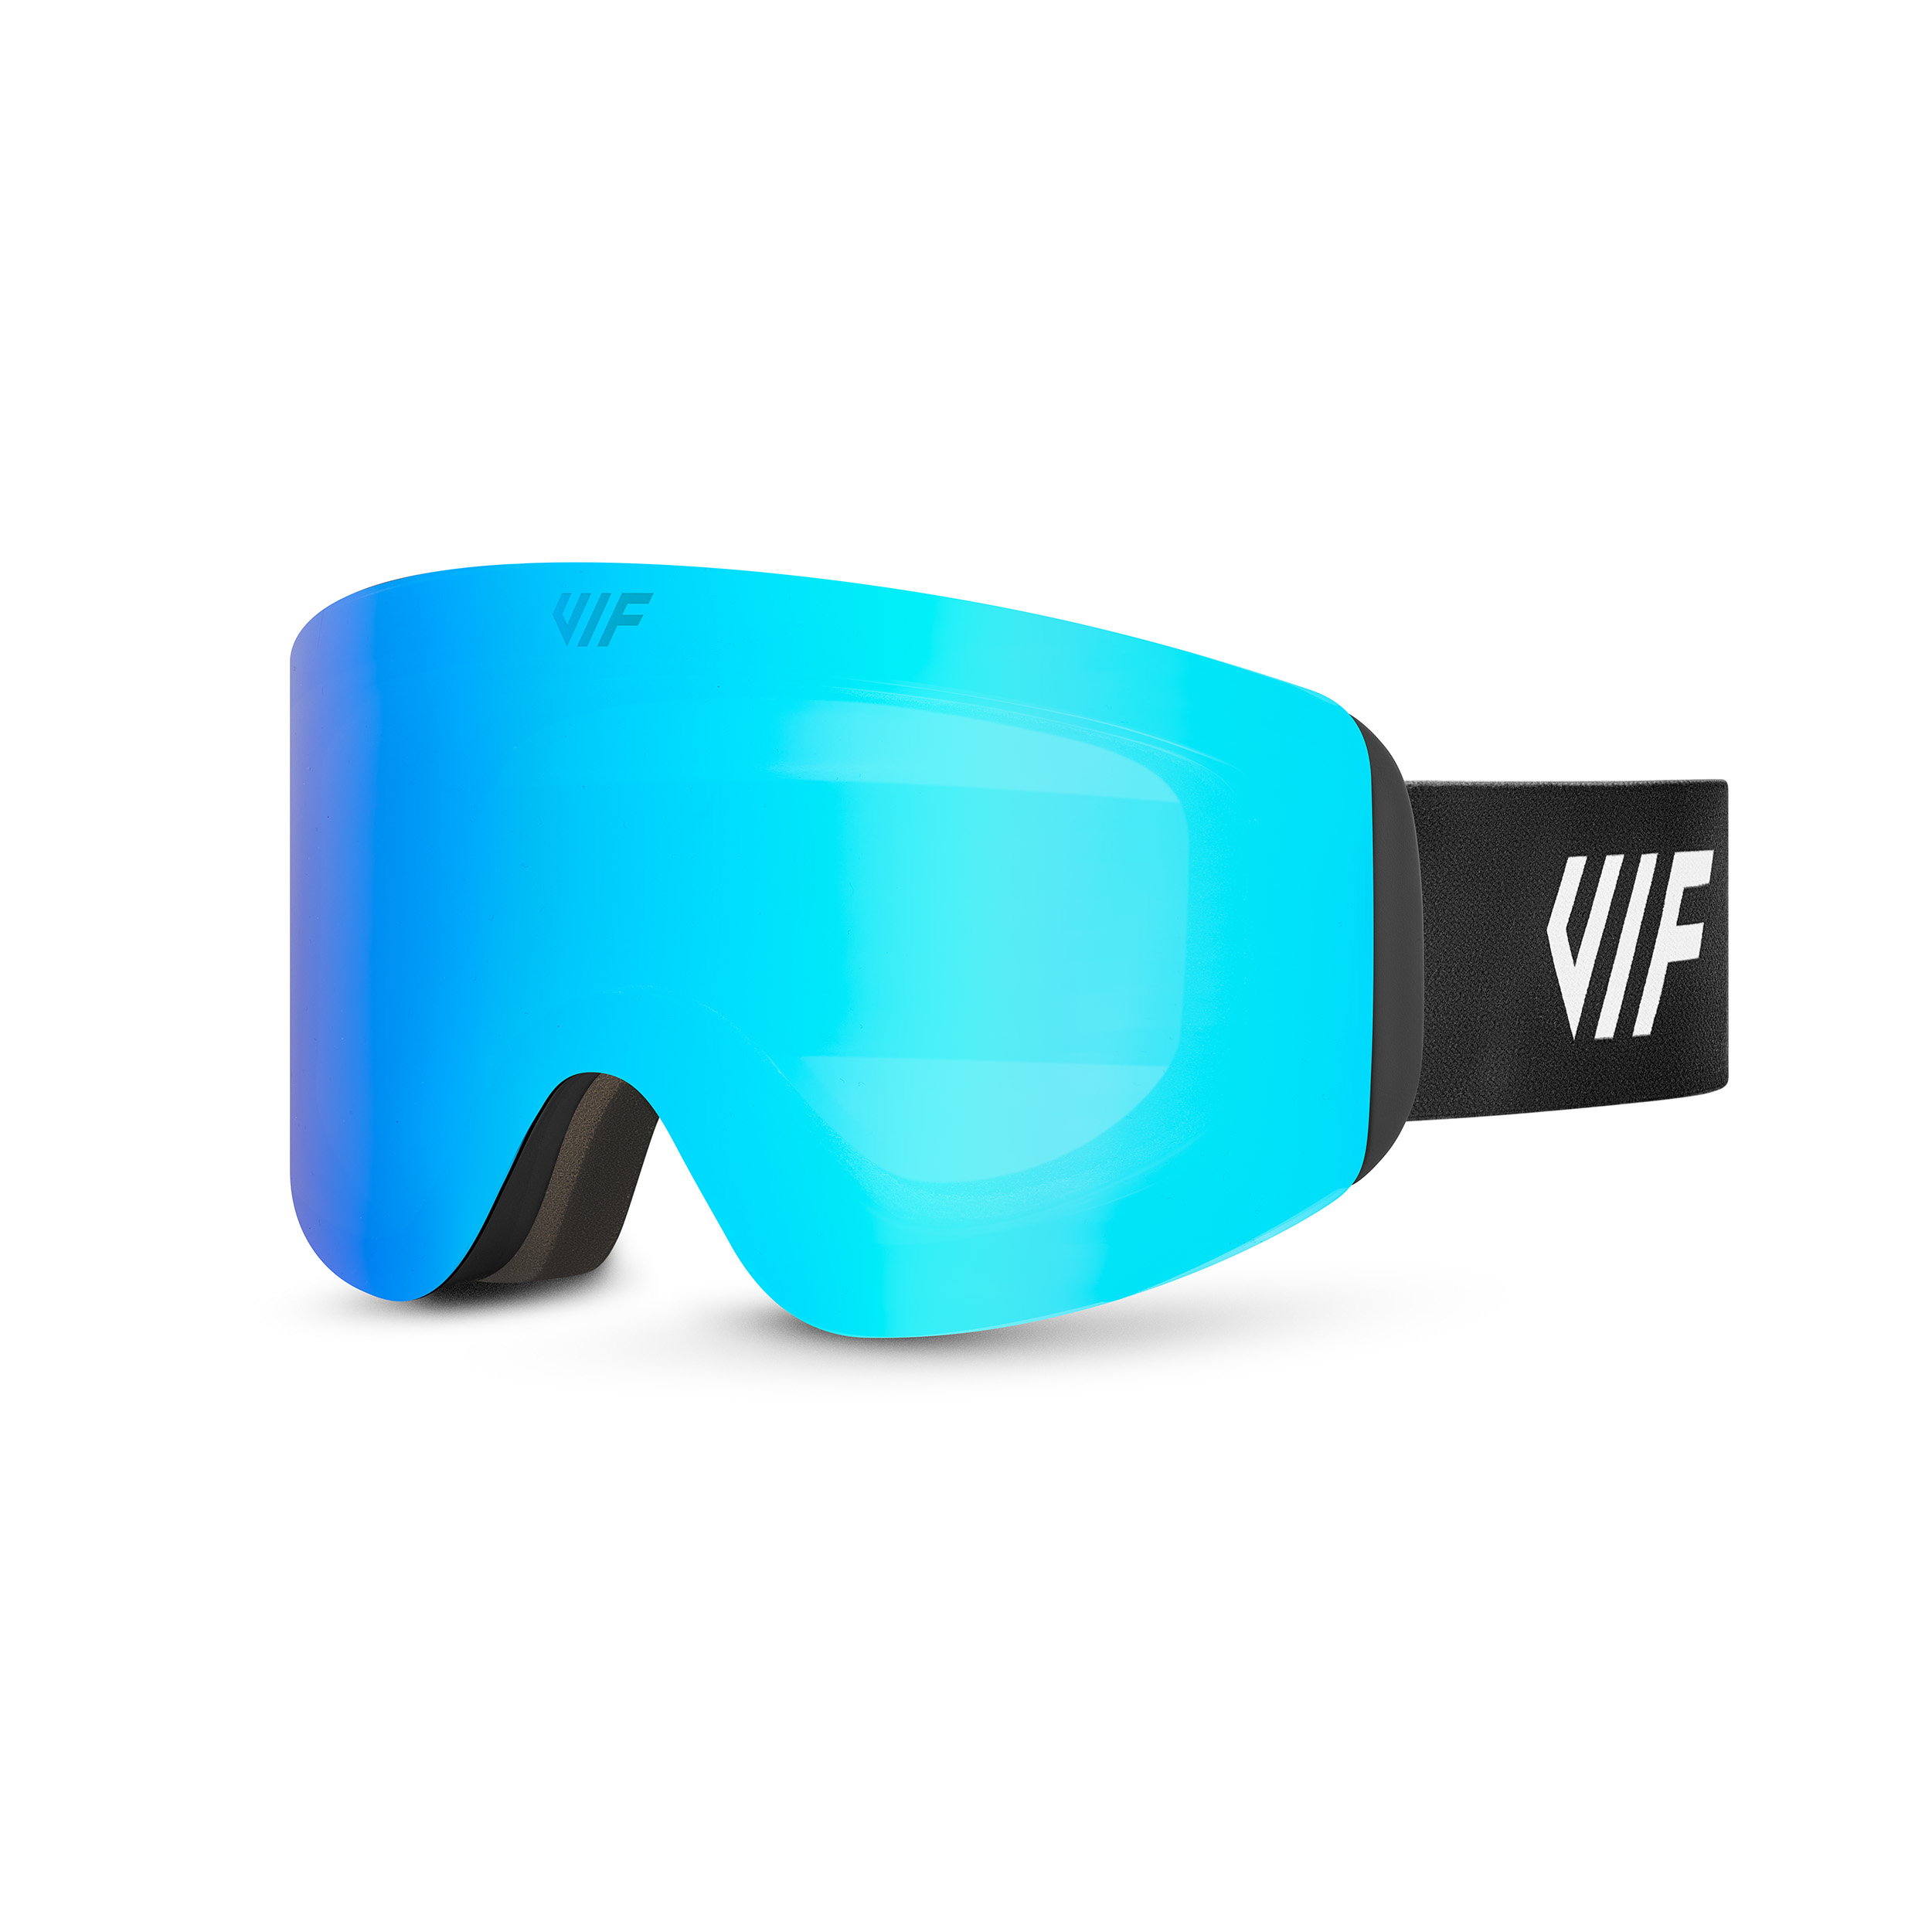 Lyžařské a snowboardové brýle VIF SKI & SNB Black x Ice Blue